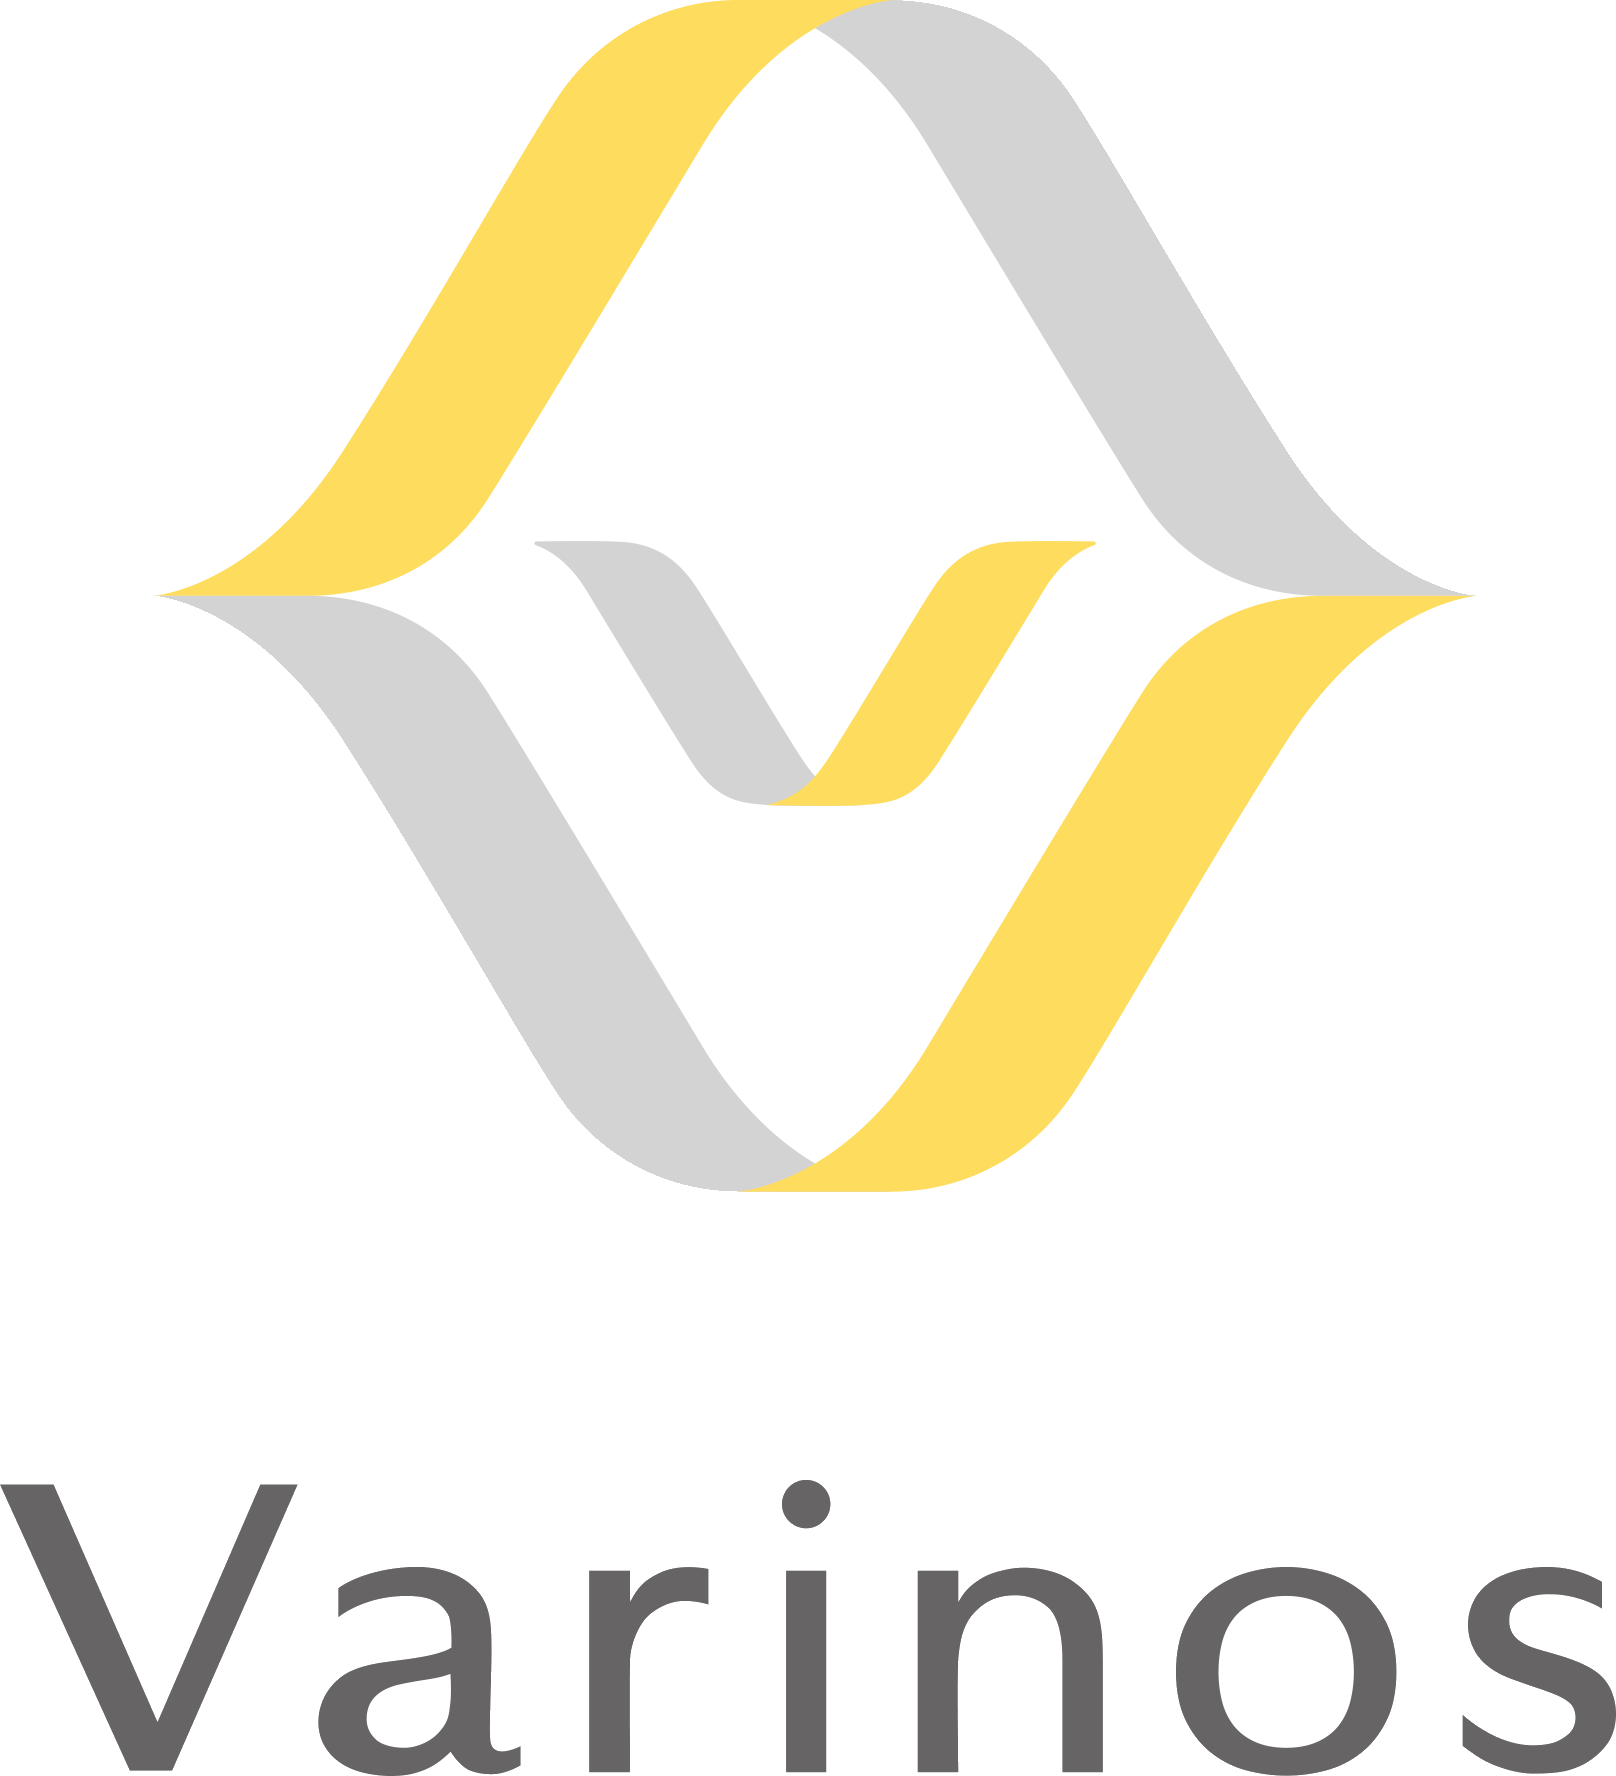 Varinos株式会社